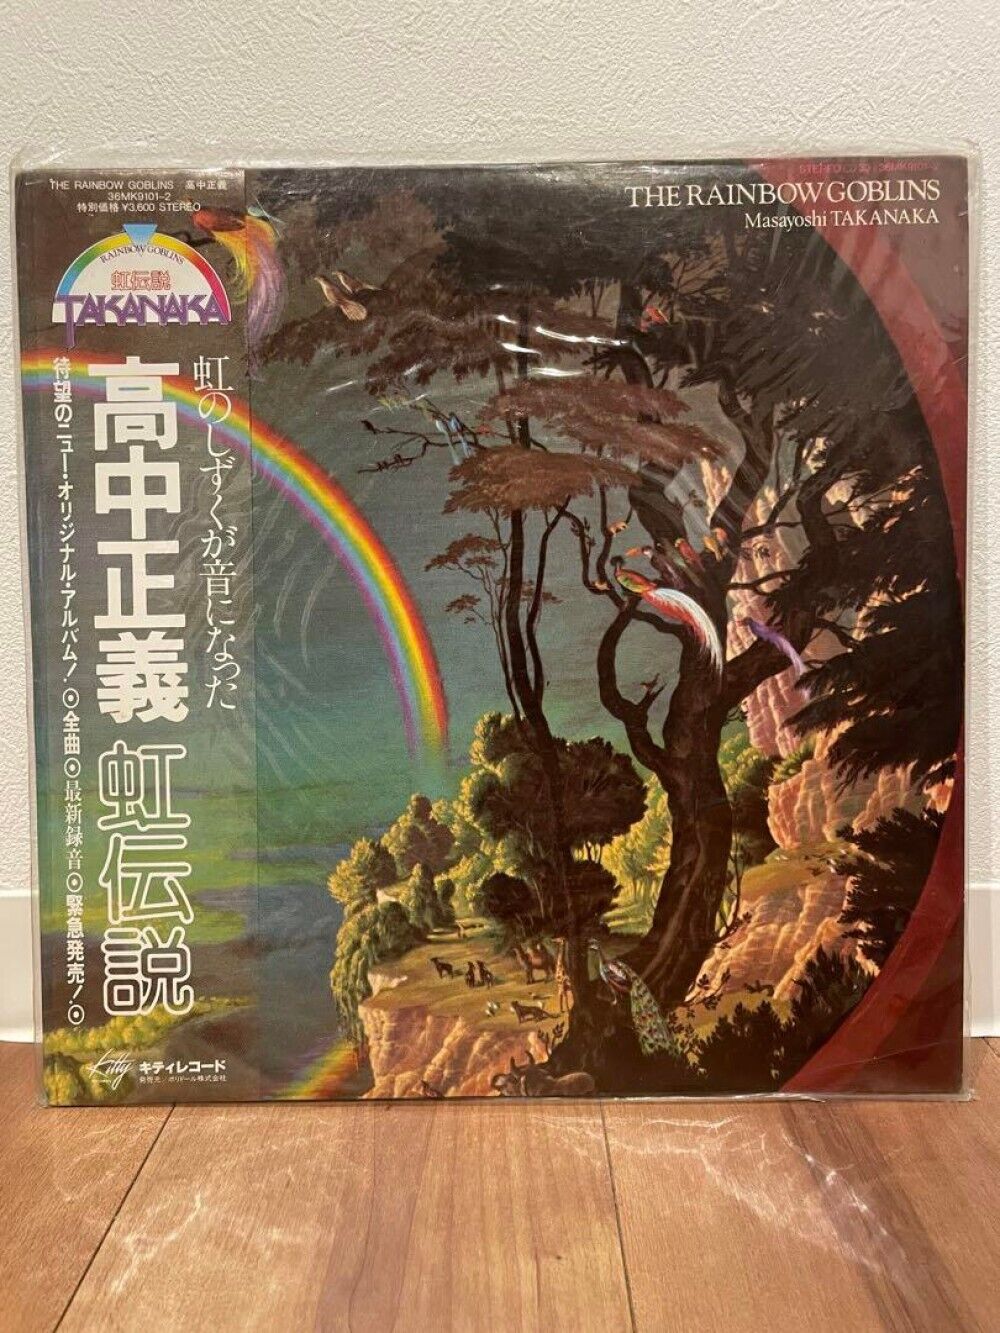 Masayoshi Takanaka THE RAINBOW GOBLINS KITTY 36MK 9101 LP OBI JAPAN USED F/S